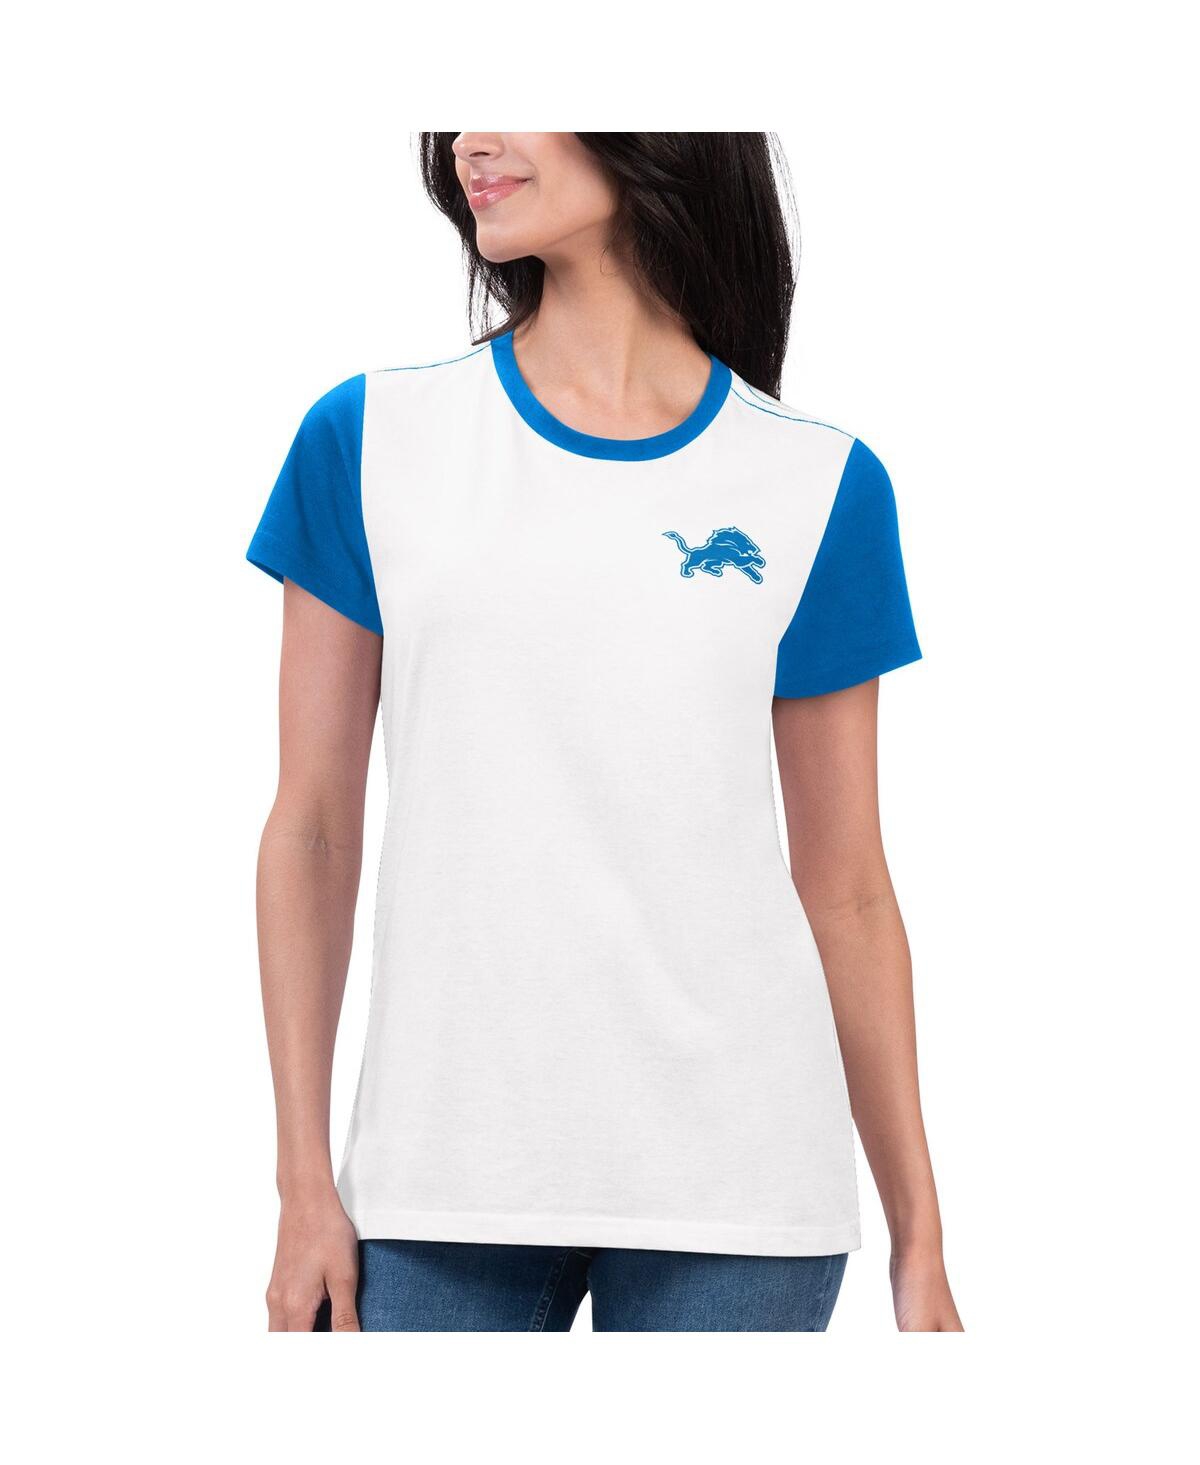 Women's G-iii 4Her by Carl Banks White, Blue Detroit Lions Fashion Illustration T-shirt - White, Blue